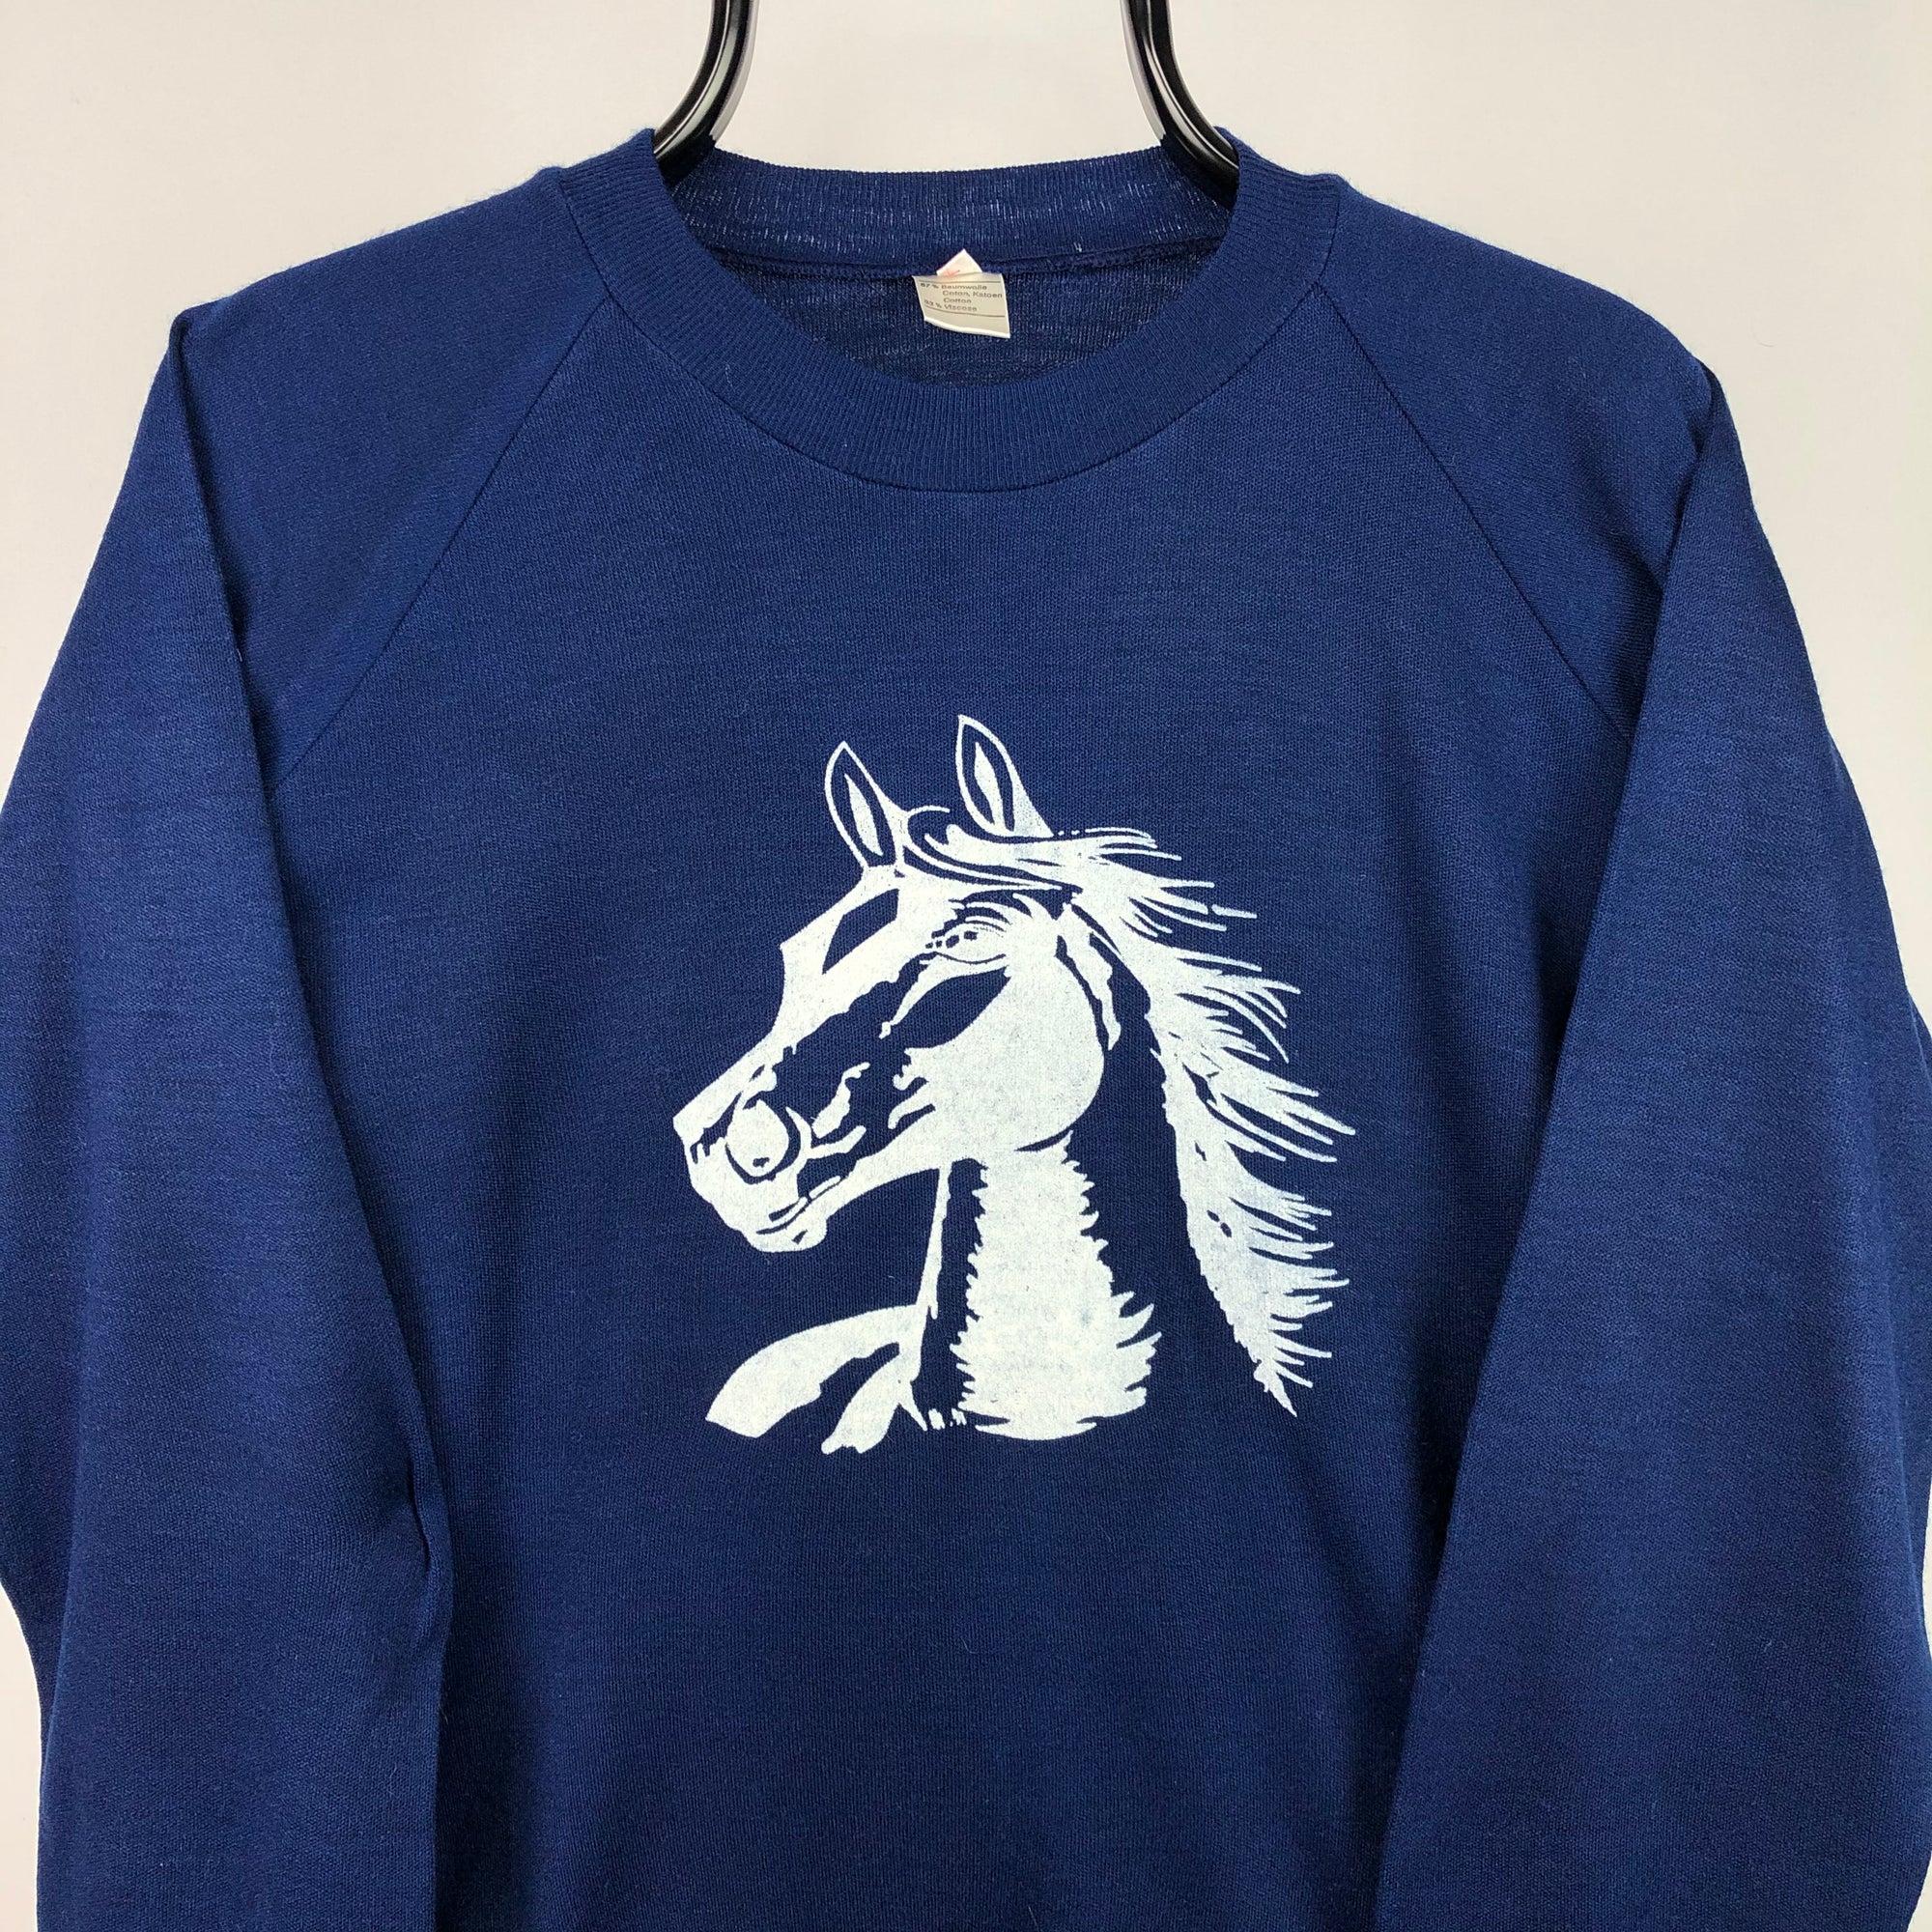 Vintage 90s Horse Print Sweatshirt - Men's Small/Women's Medium